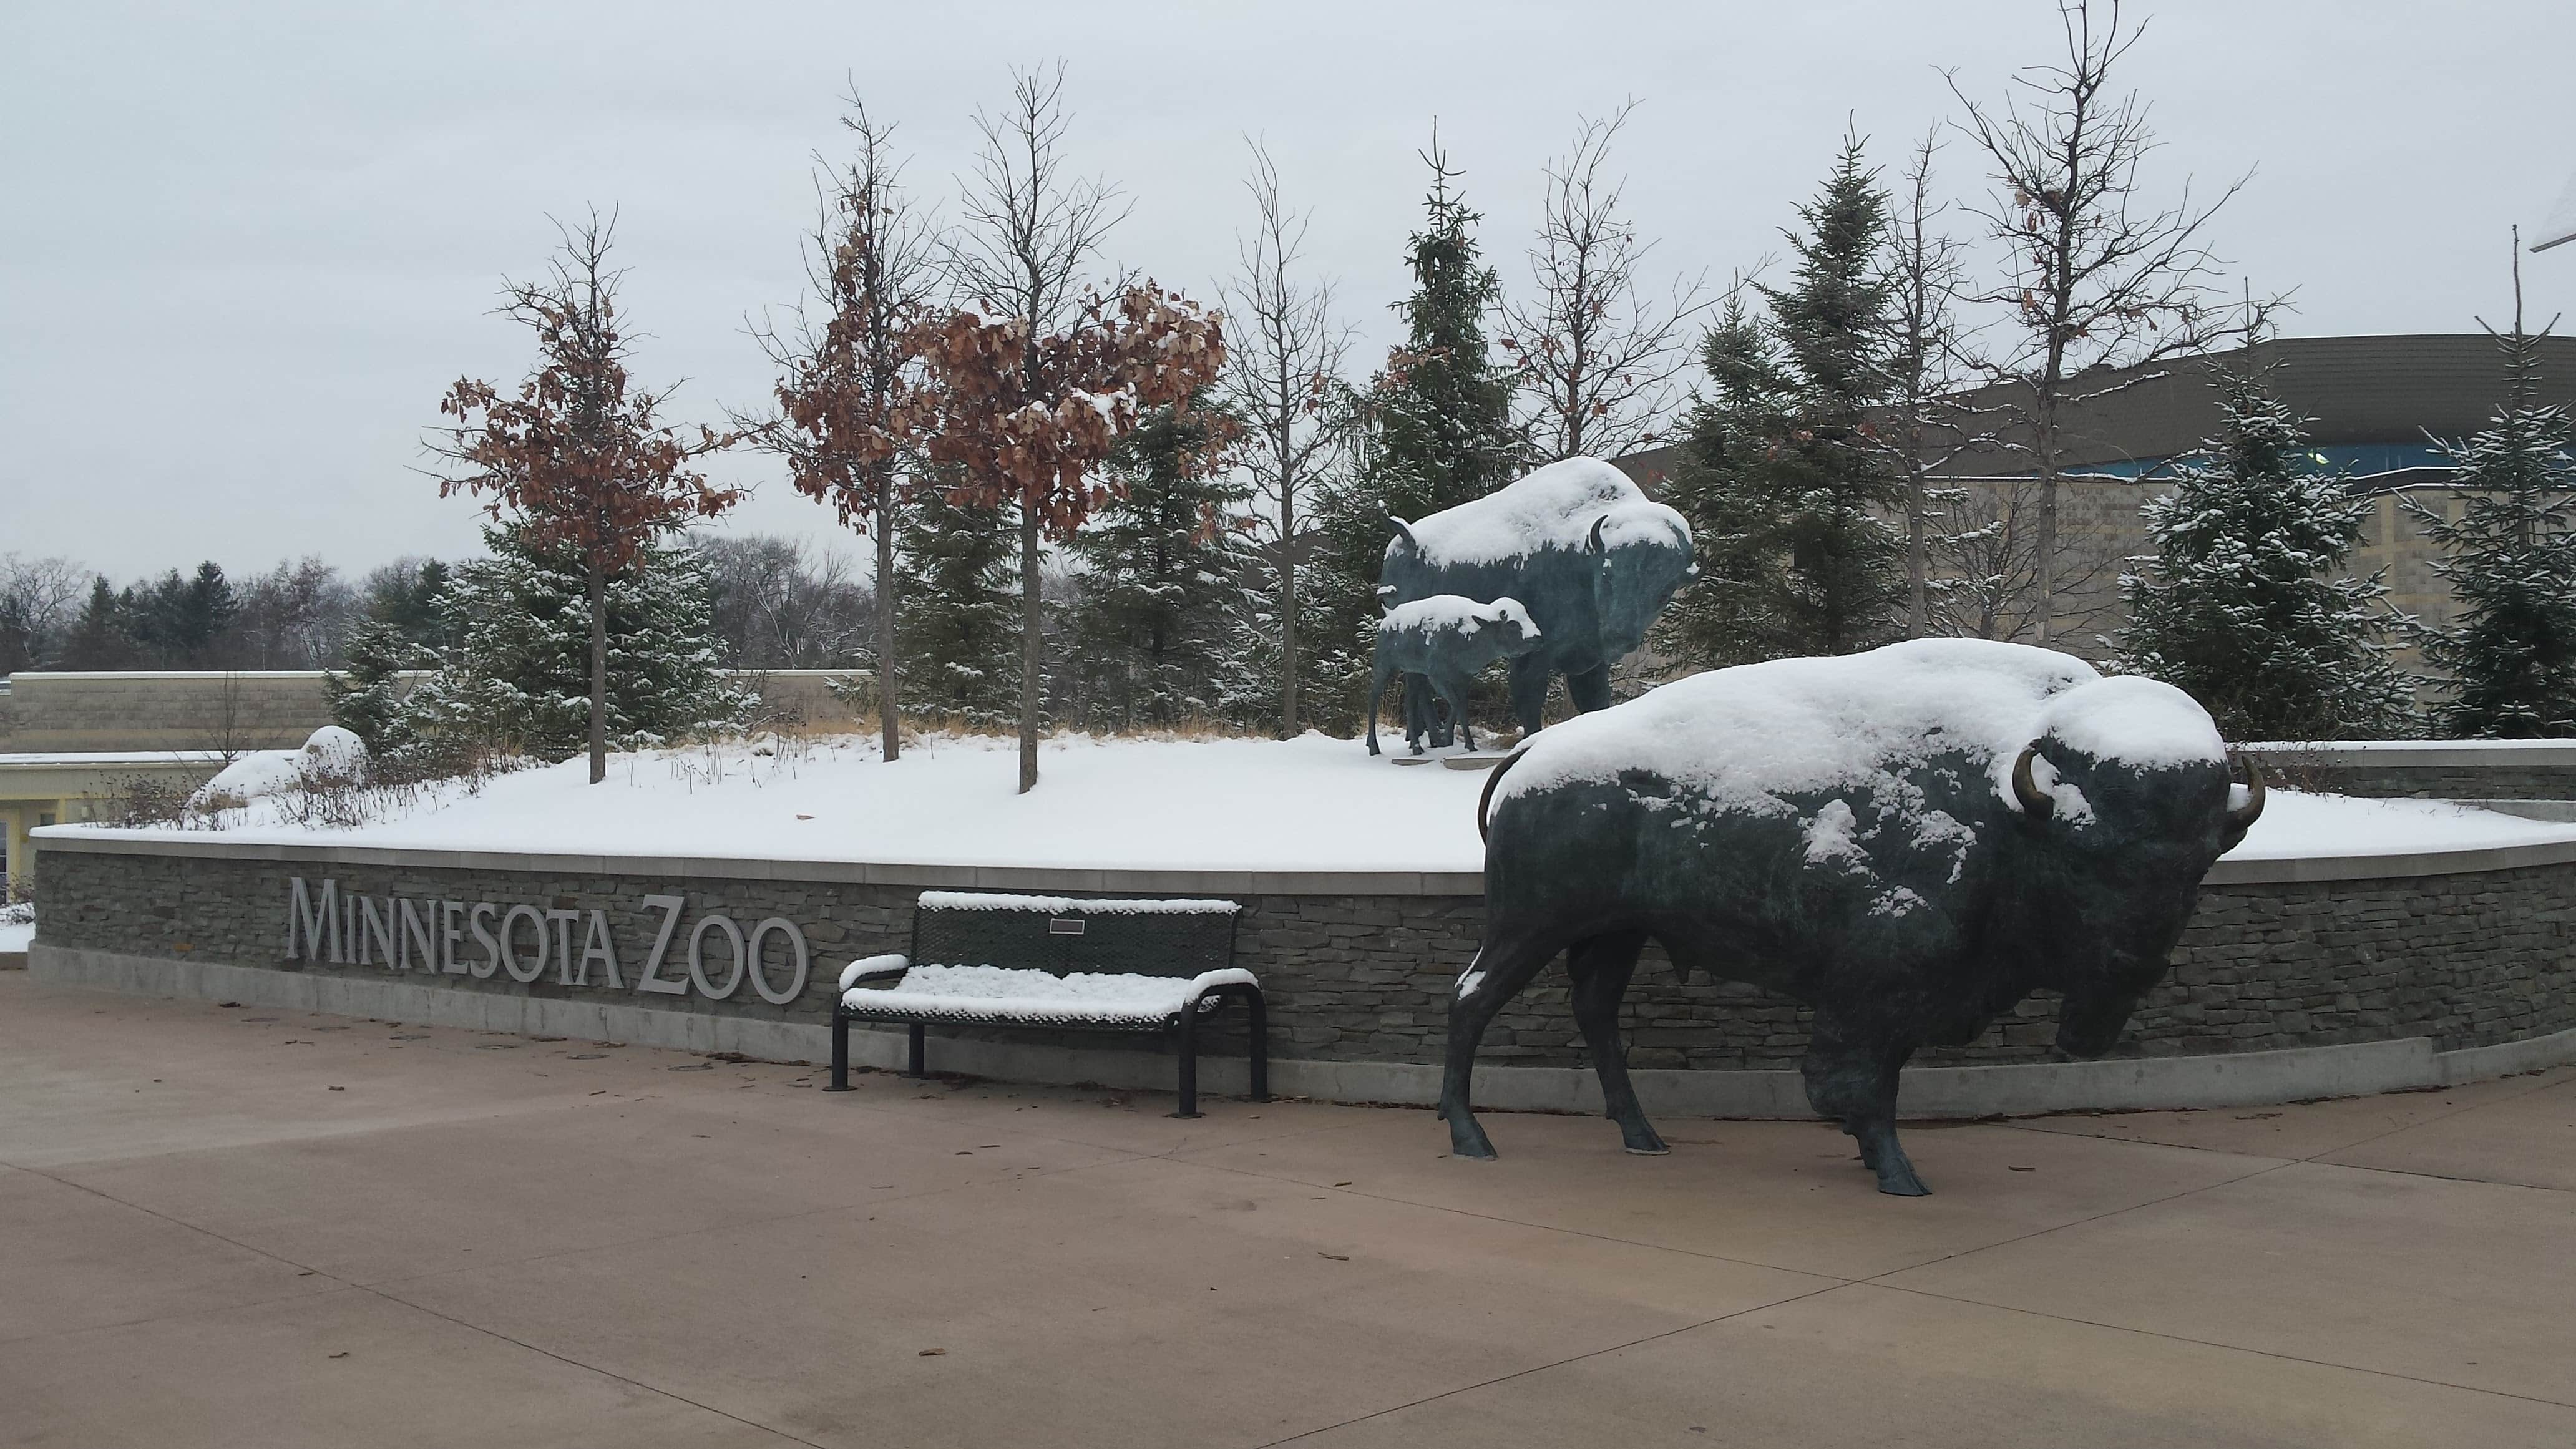 Minnesota Zoo in Winter